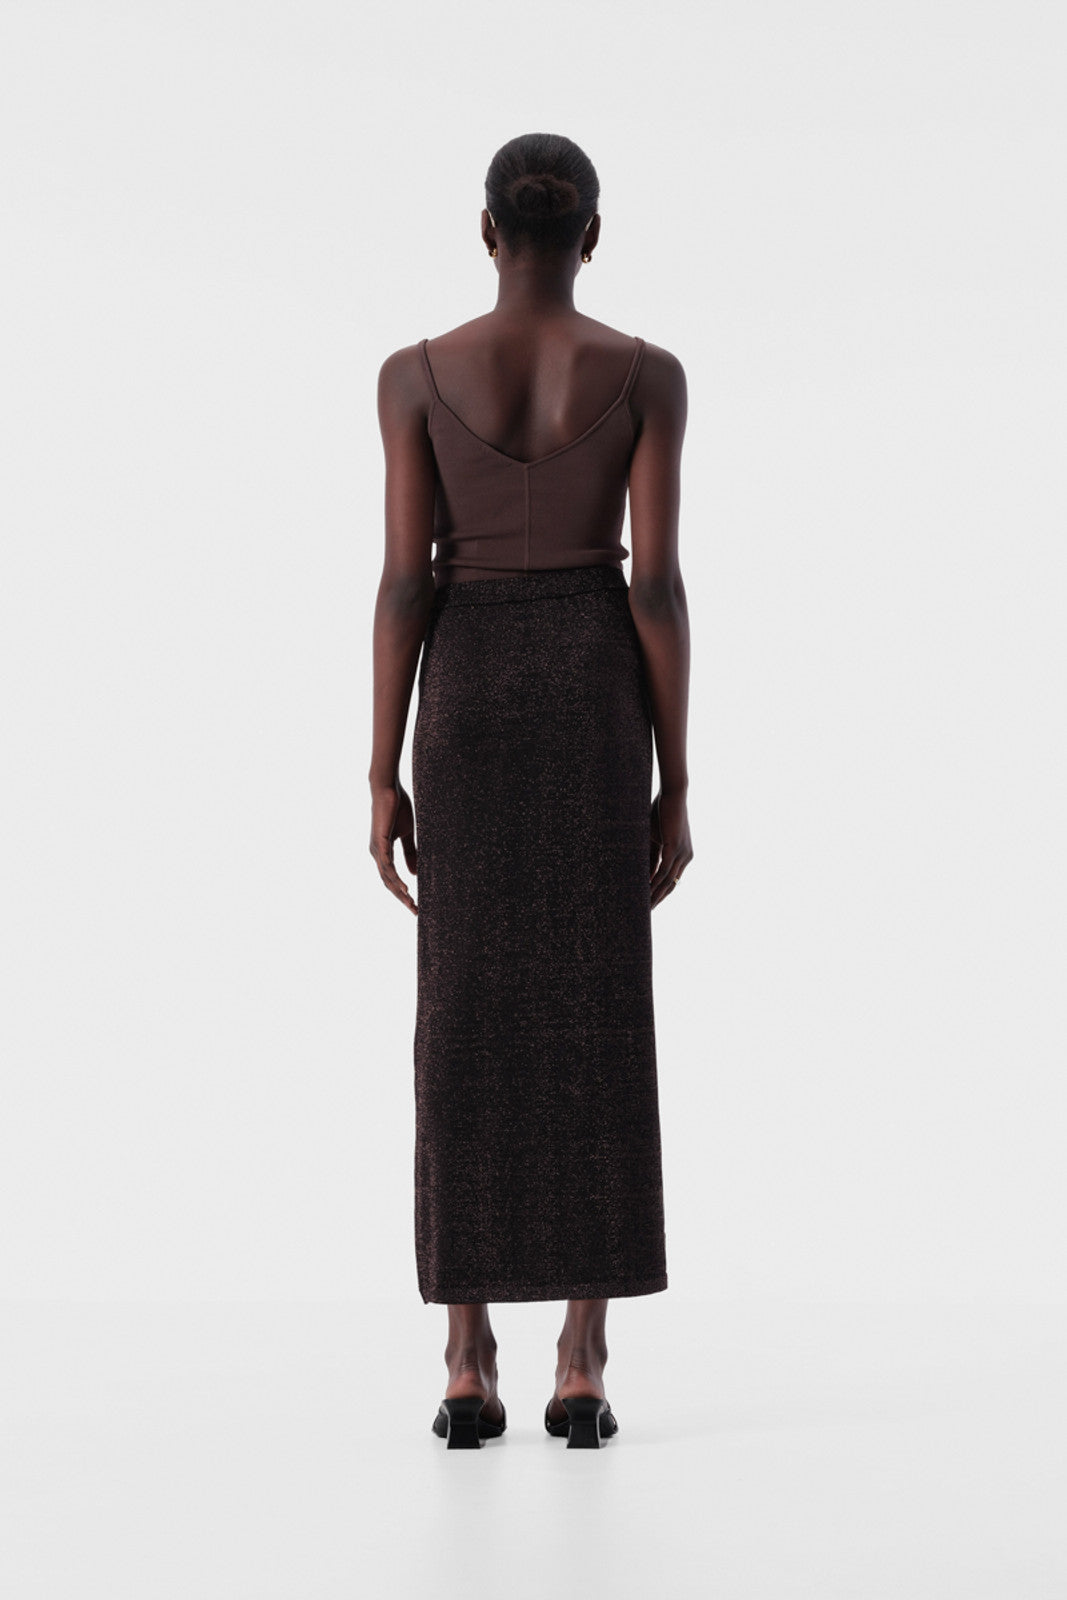 Thelma Knit Skirt - Copper Lurex